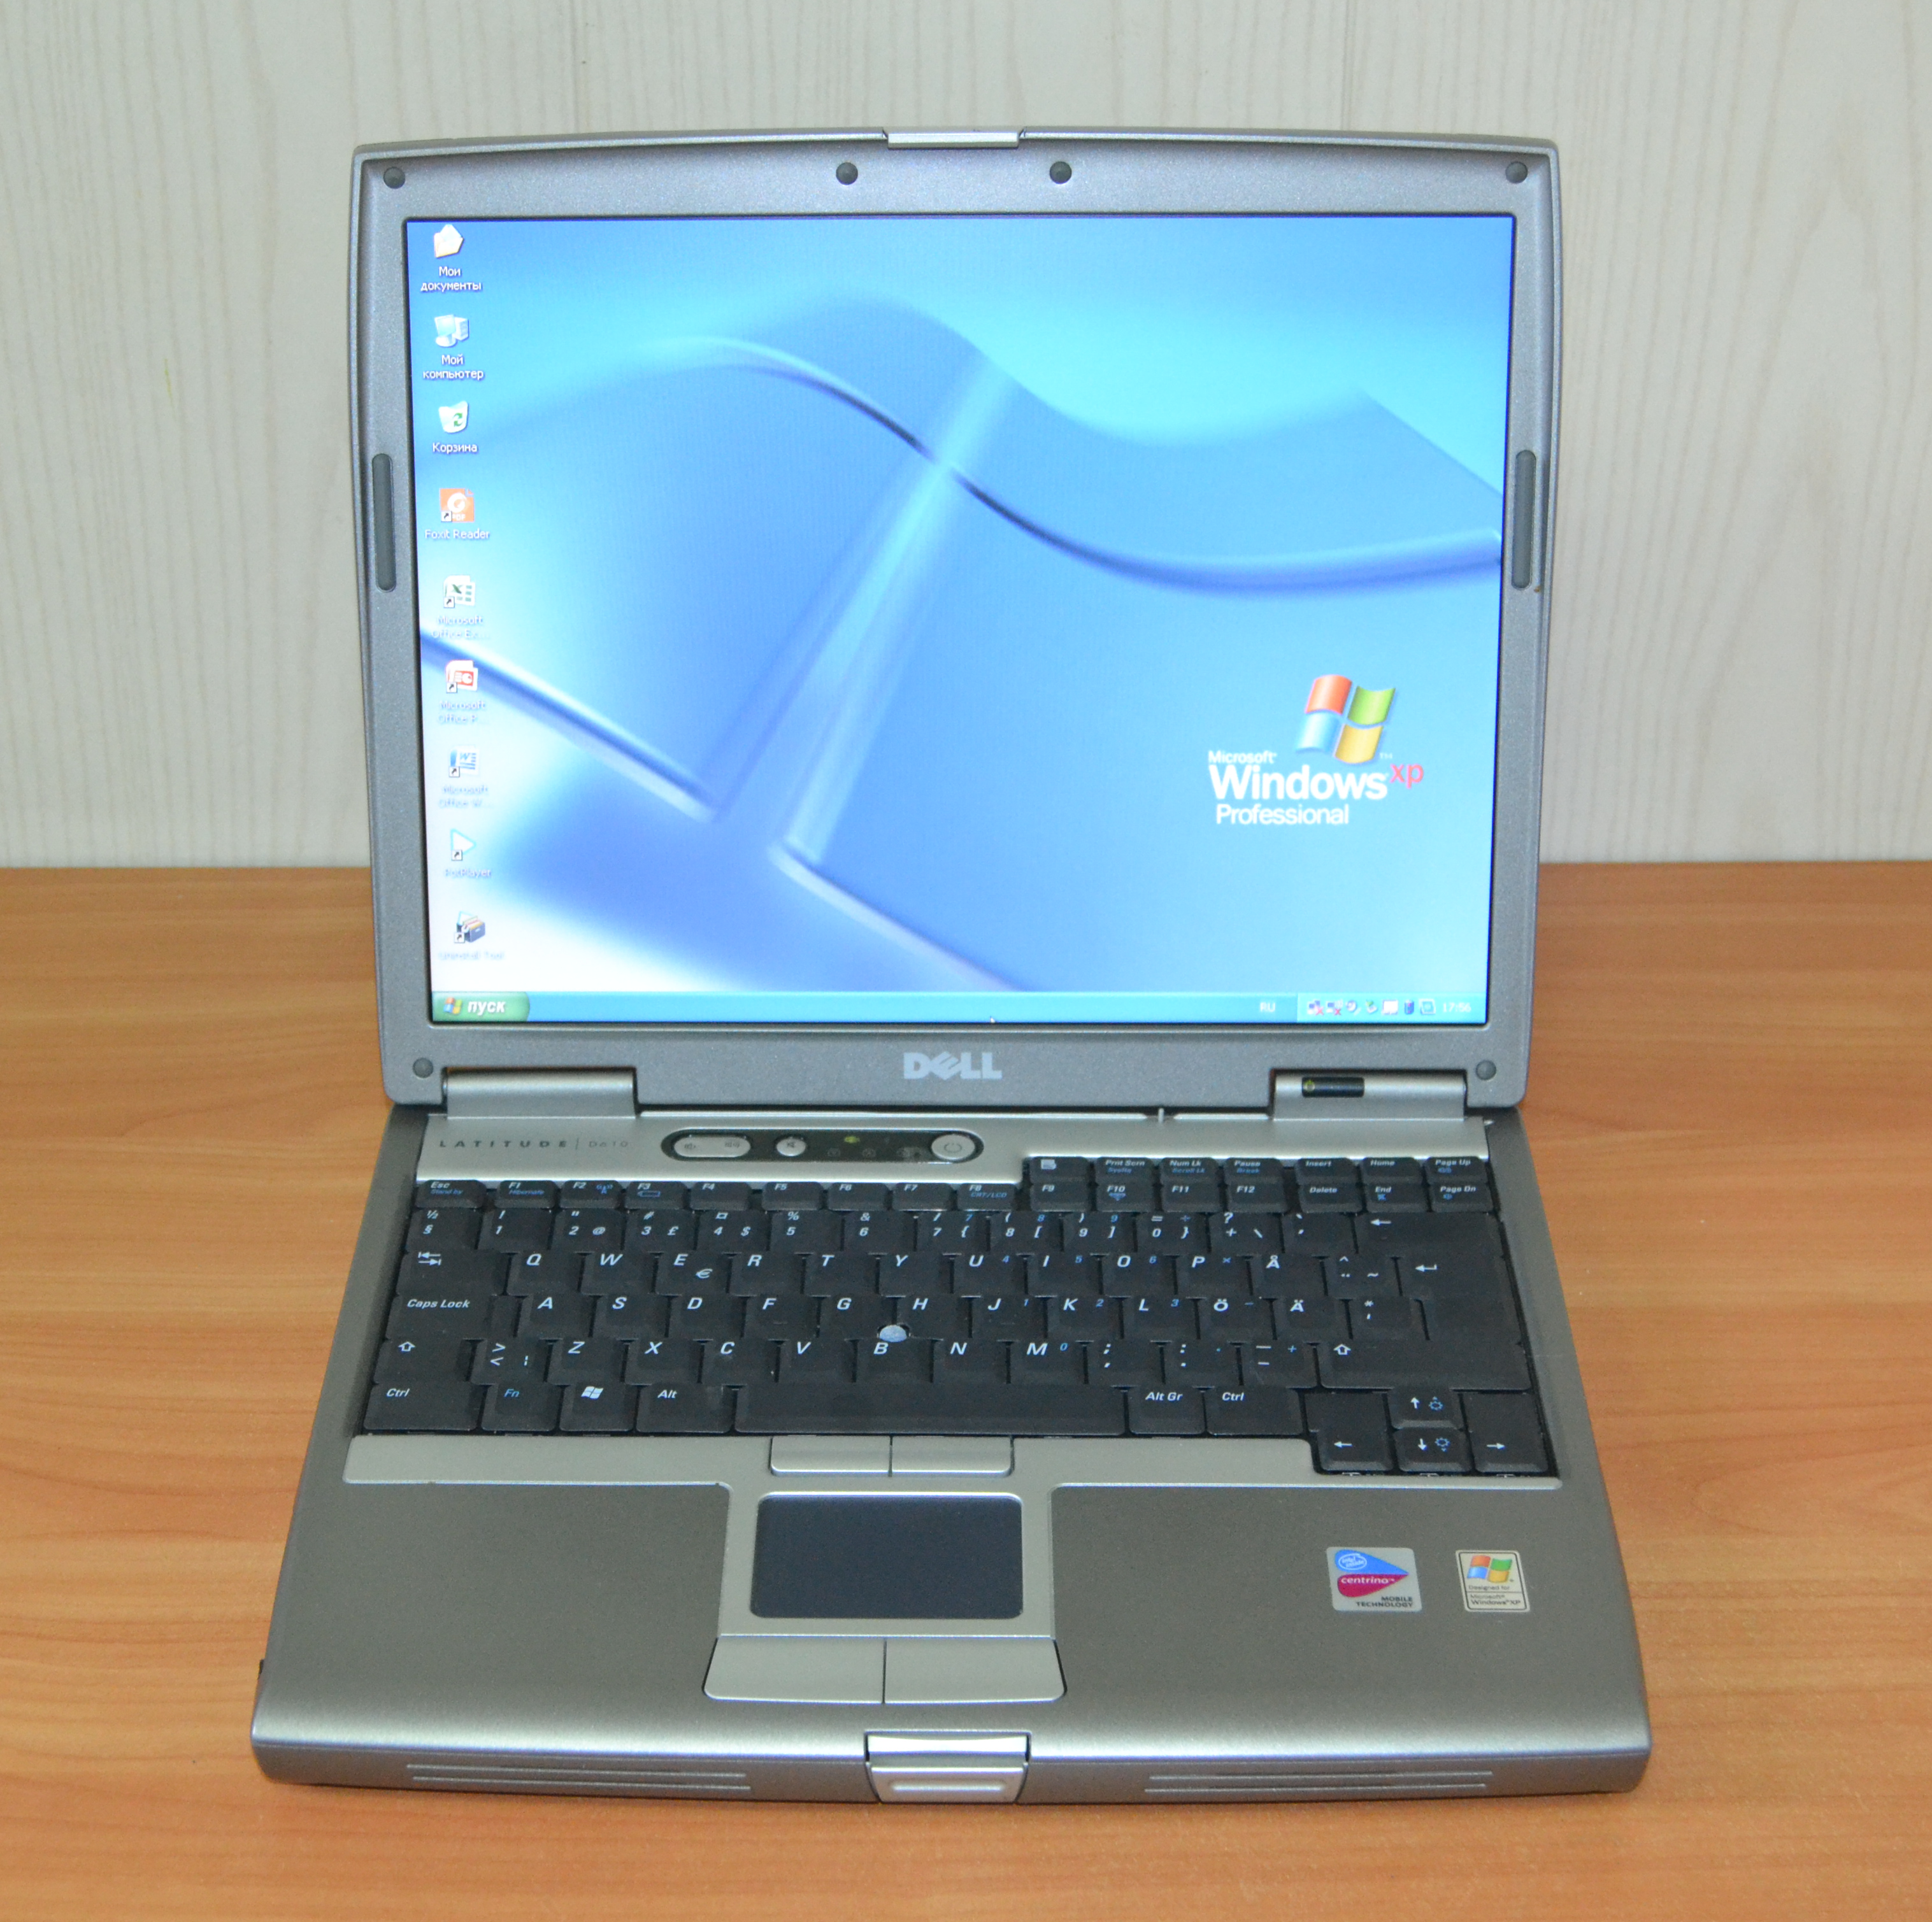 Dell D610 — купить б/у ноутбук за 6,500 руб. с гарантией 6 месяцев